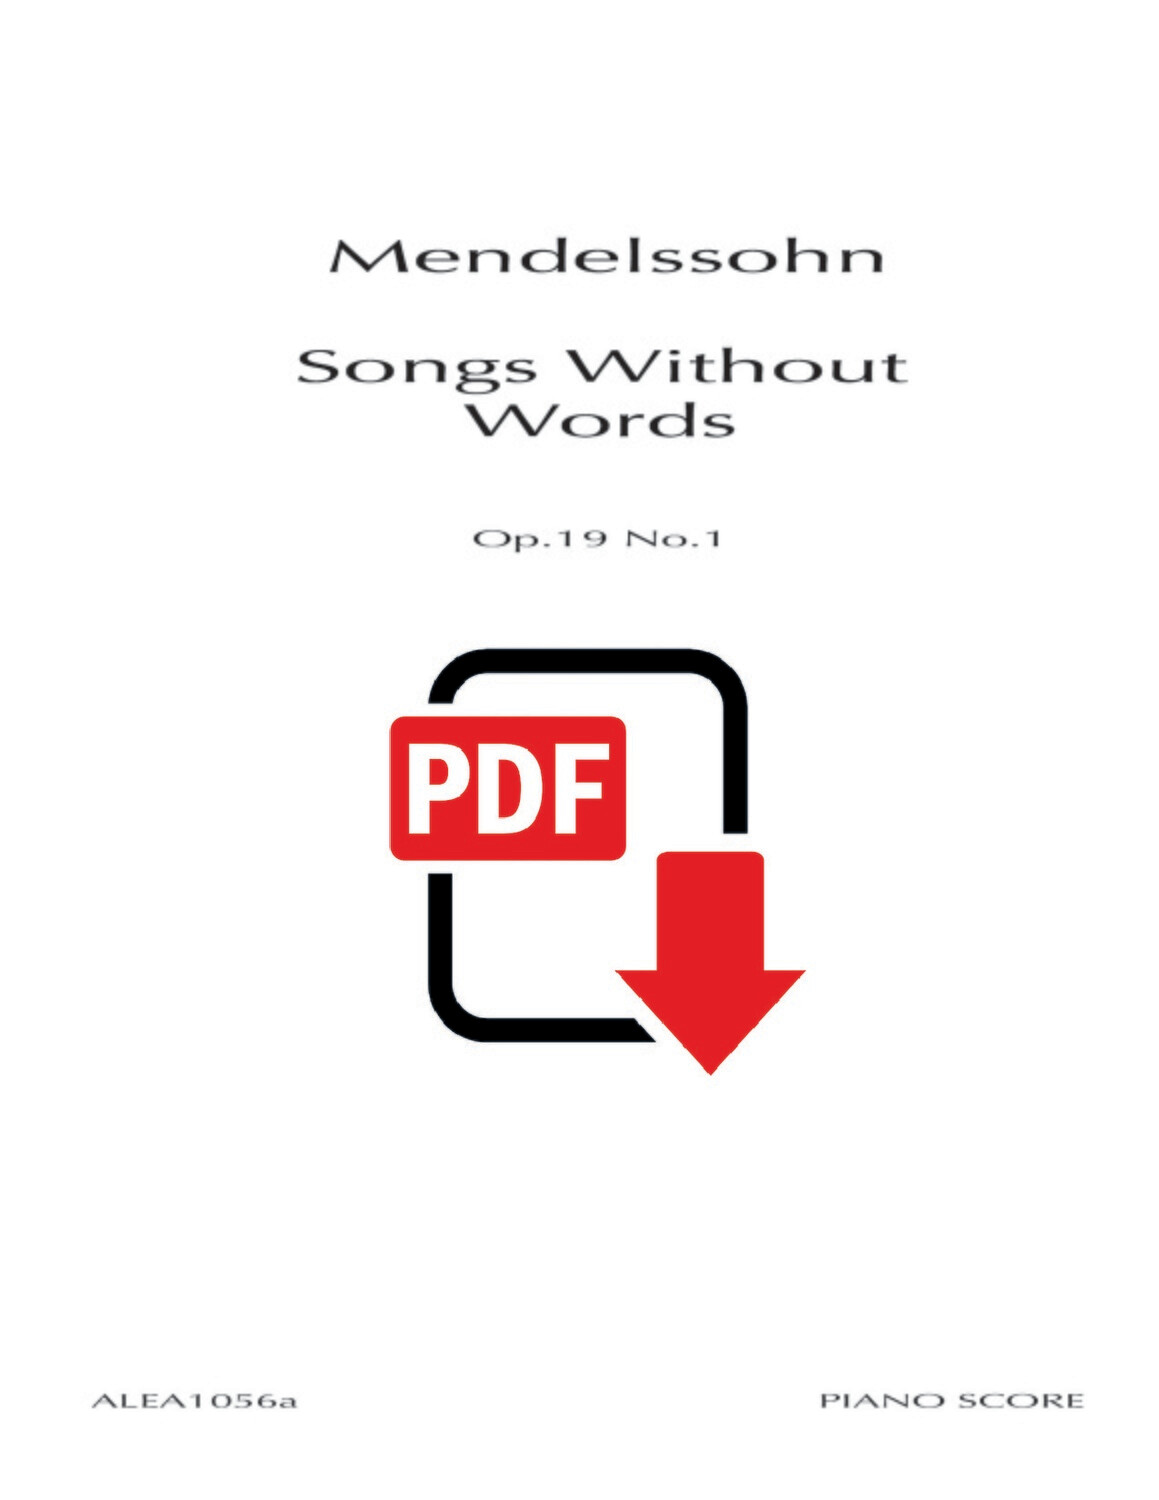 Mendelssohn: Songs Without Words Op.19 No.1 (PDF)